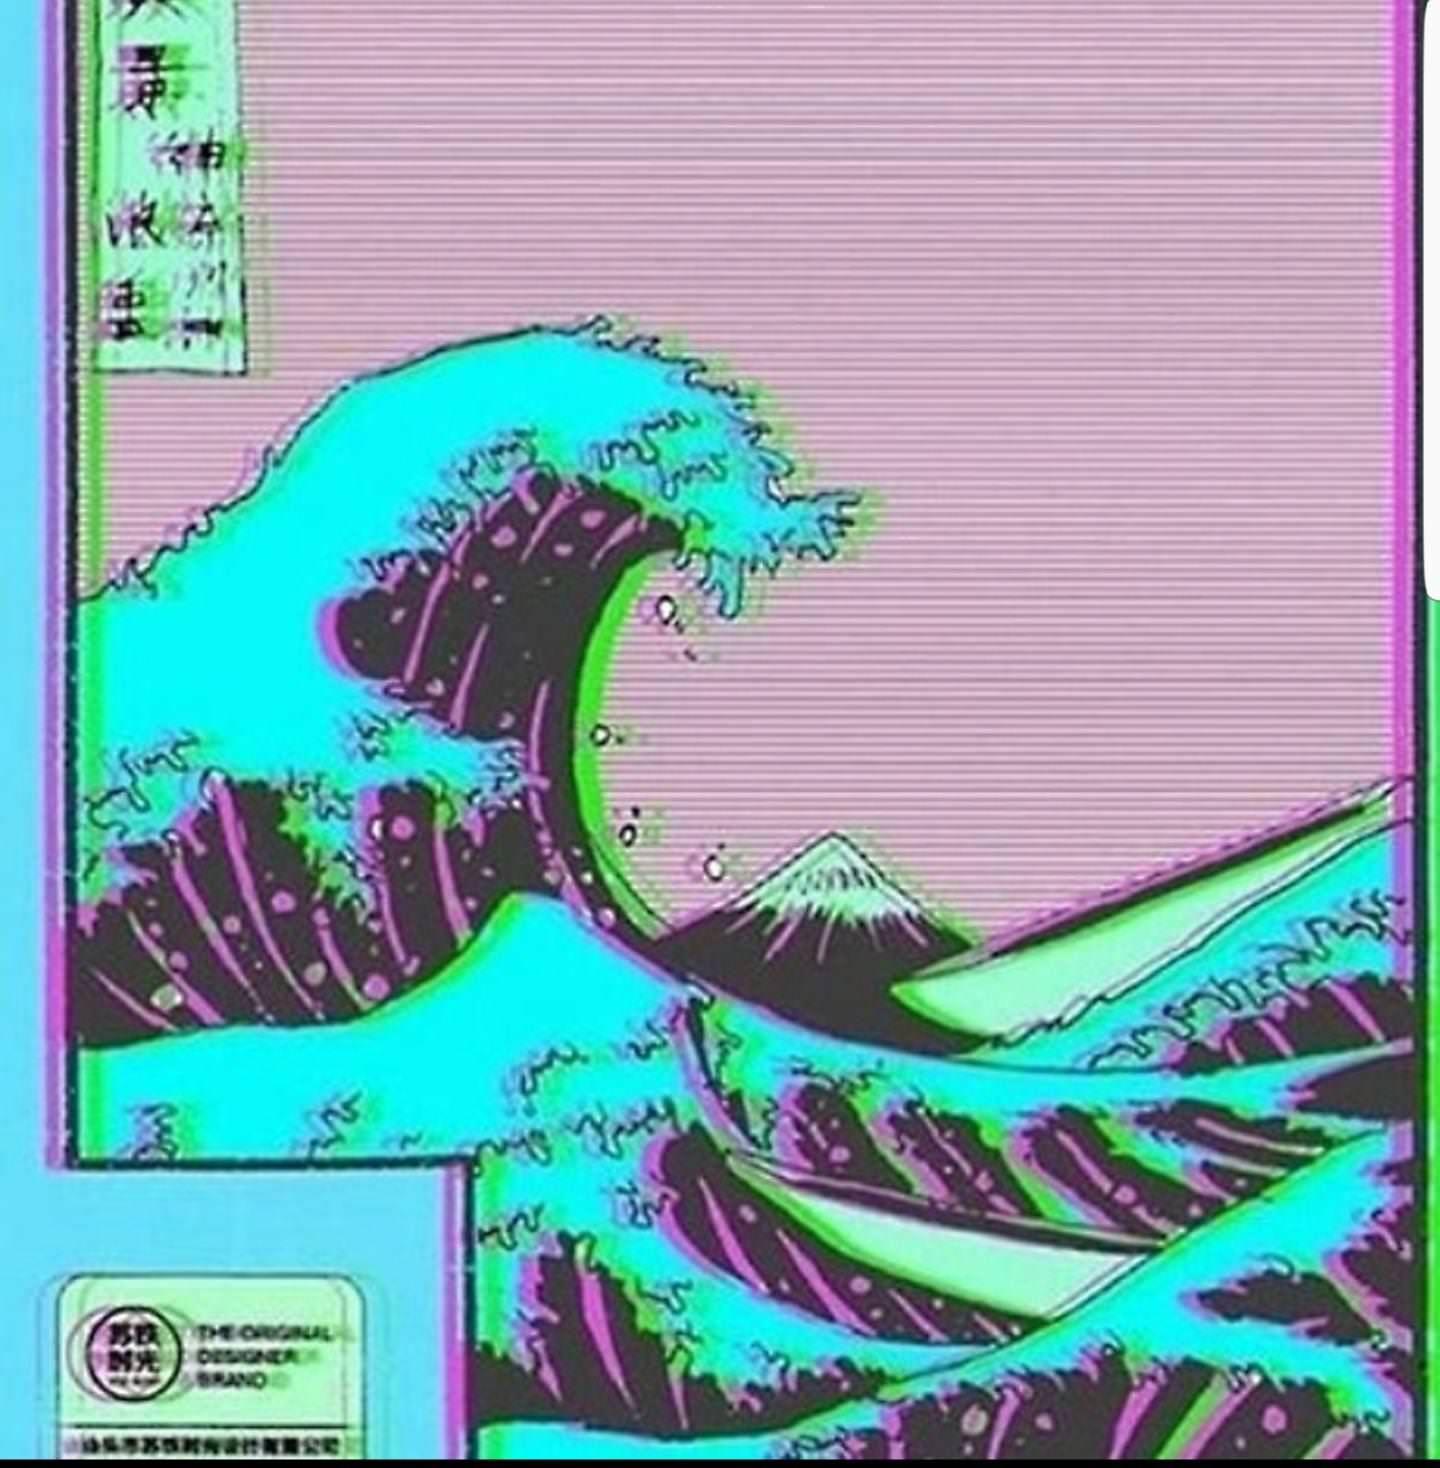 The Great Wave off Kanagawa. Vaporwave wallpaper